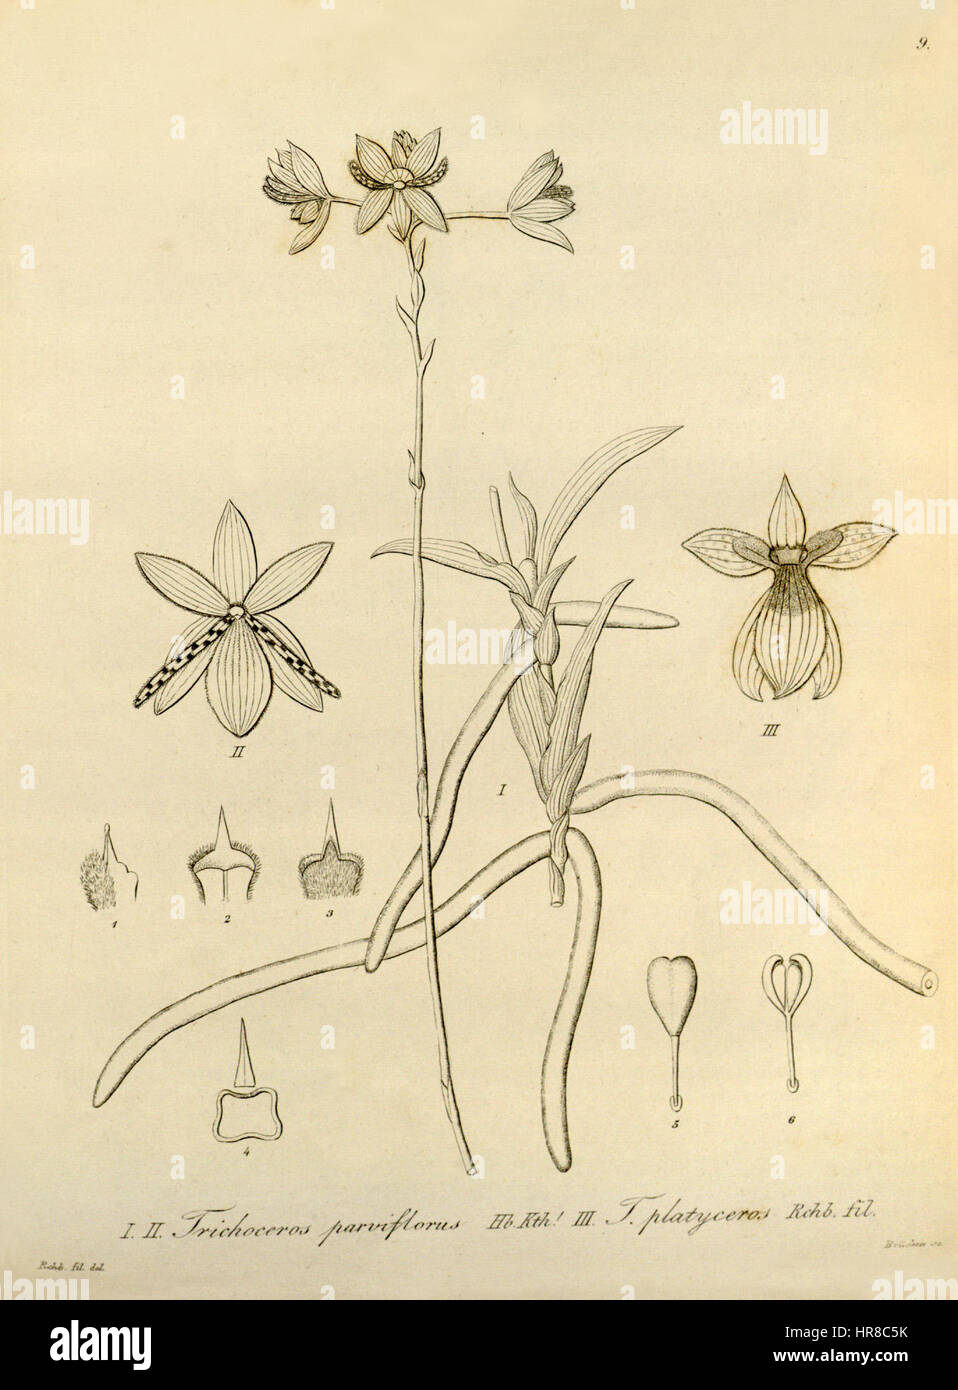 Trichoceros antennifer (as Trichoceros parviflorus) and Trichoceros platyceros - Xenia vol 1 pl 9 (1858) Stock Photo